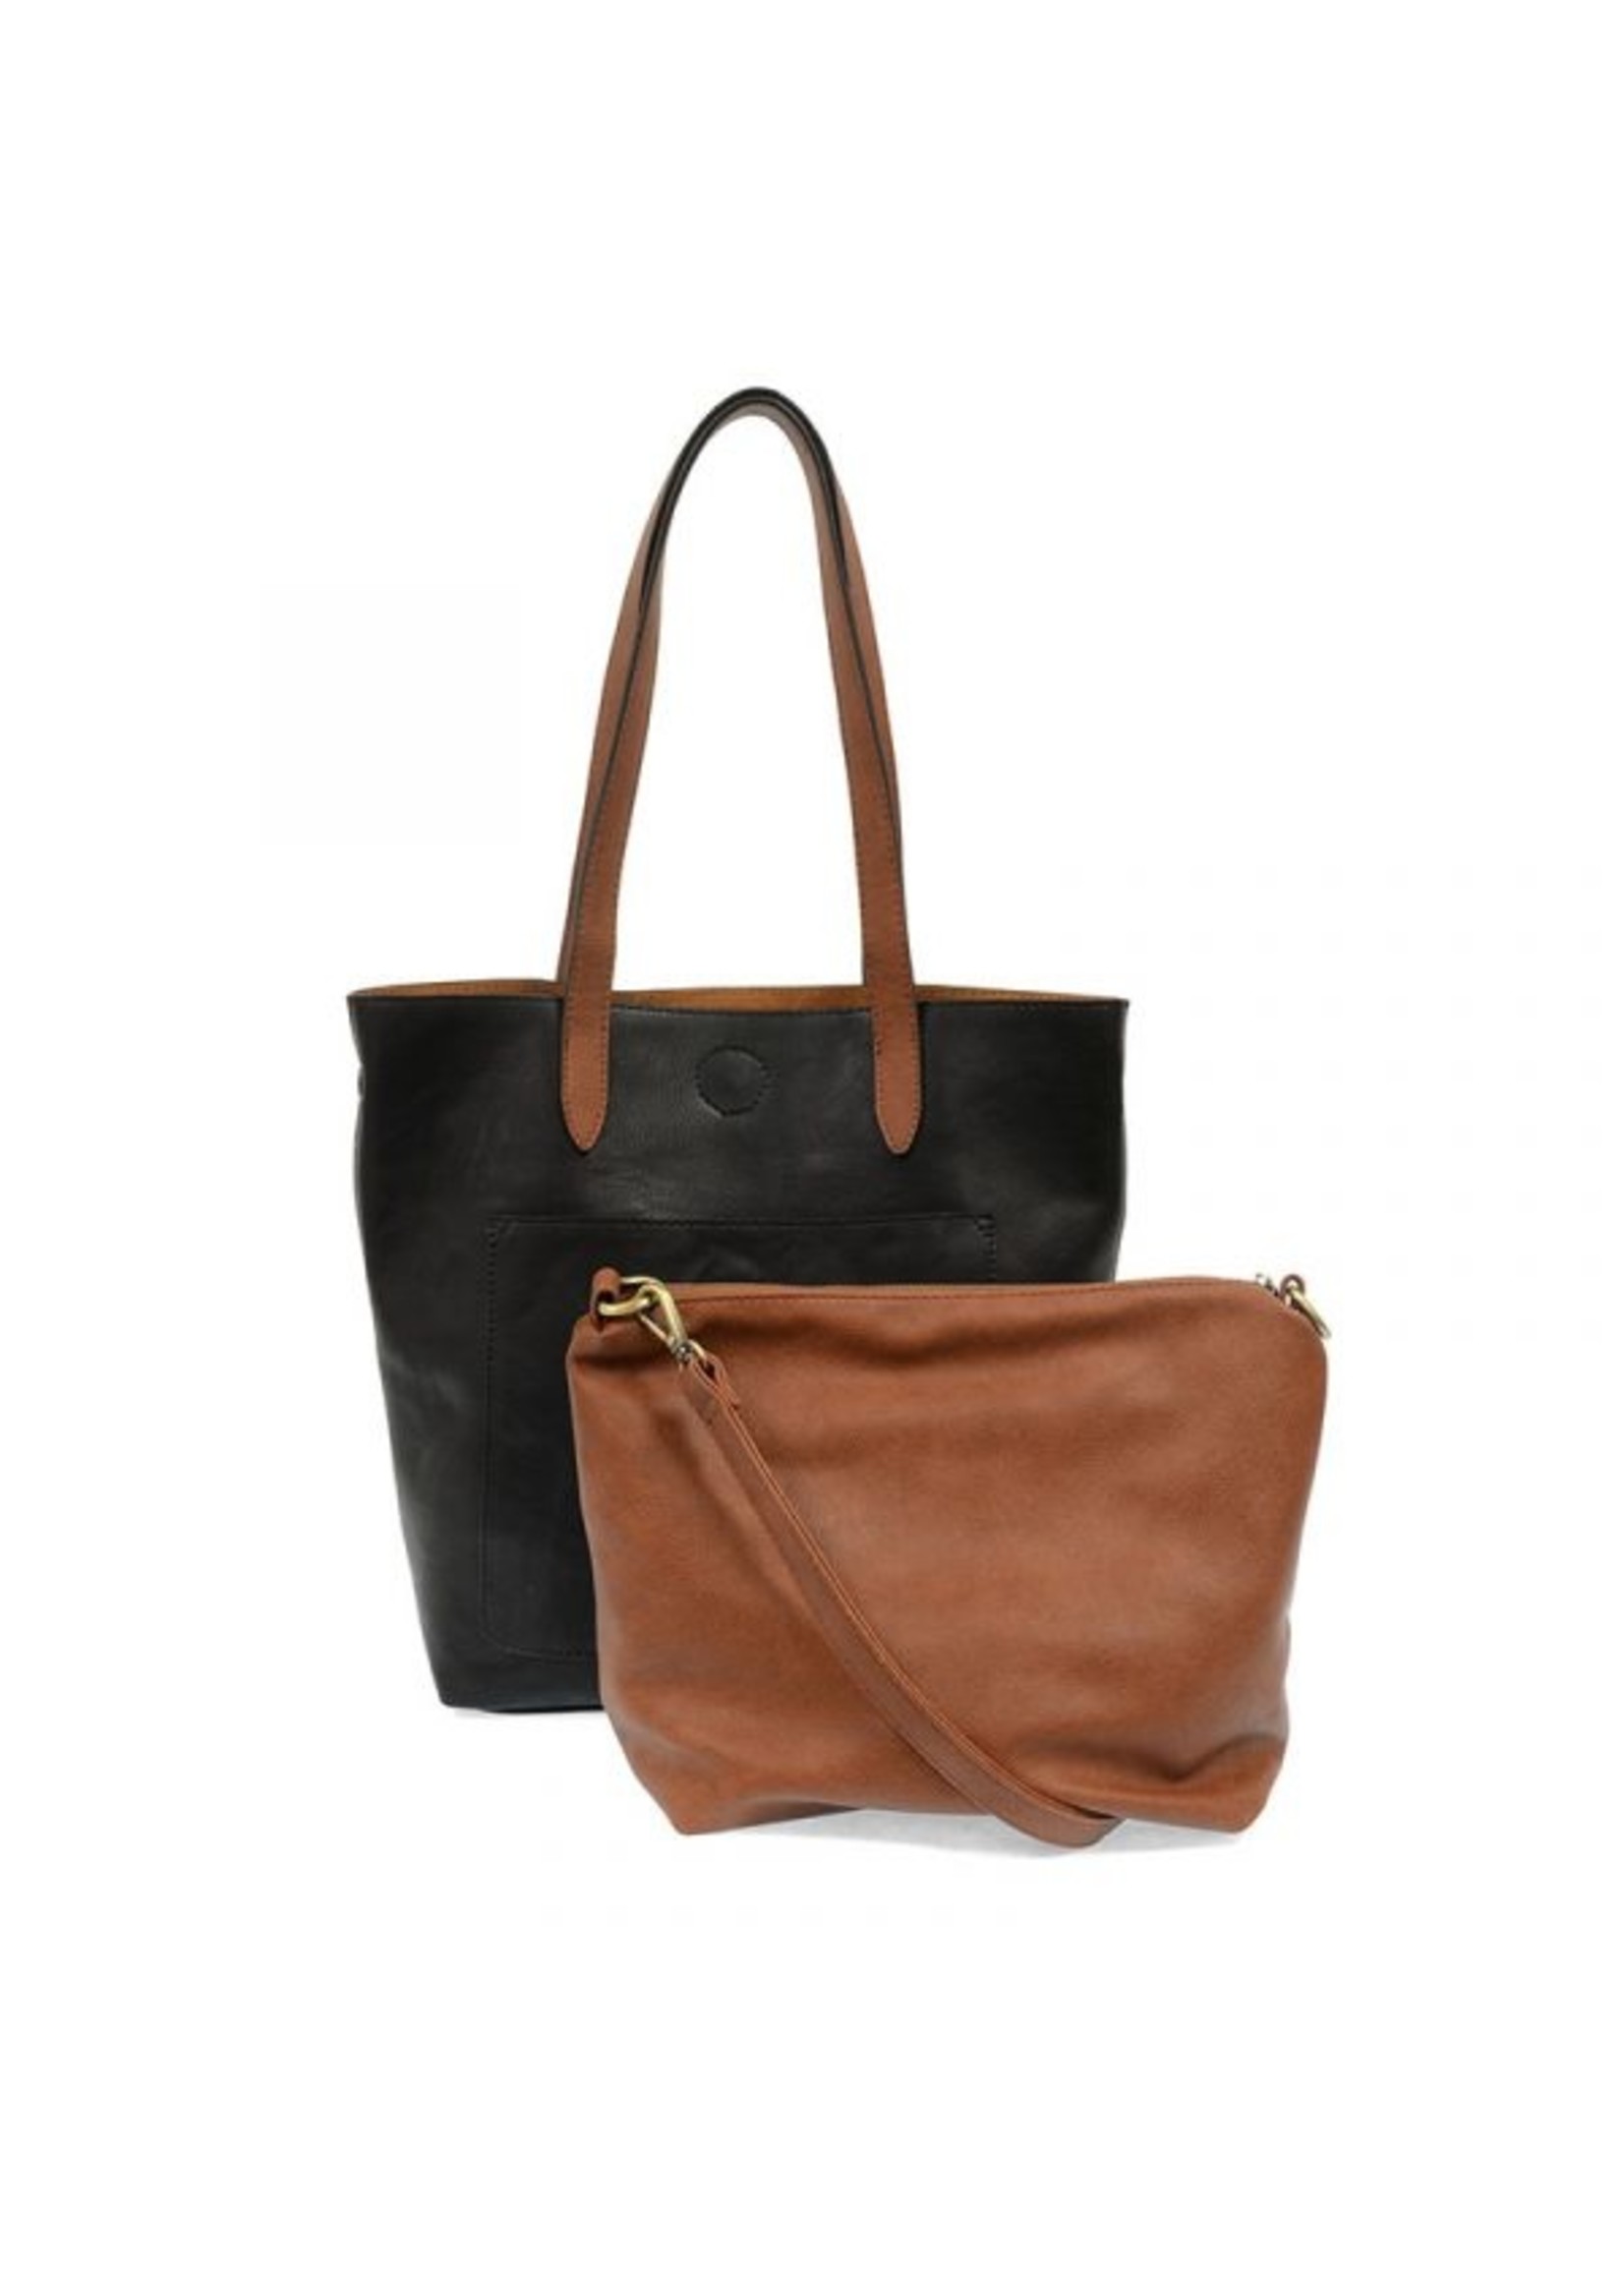 Joy Susan L8112 Tally Tote Handbag